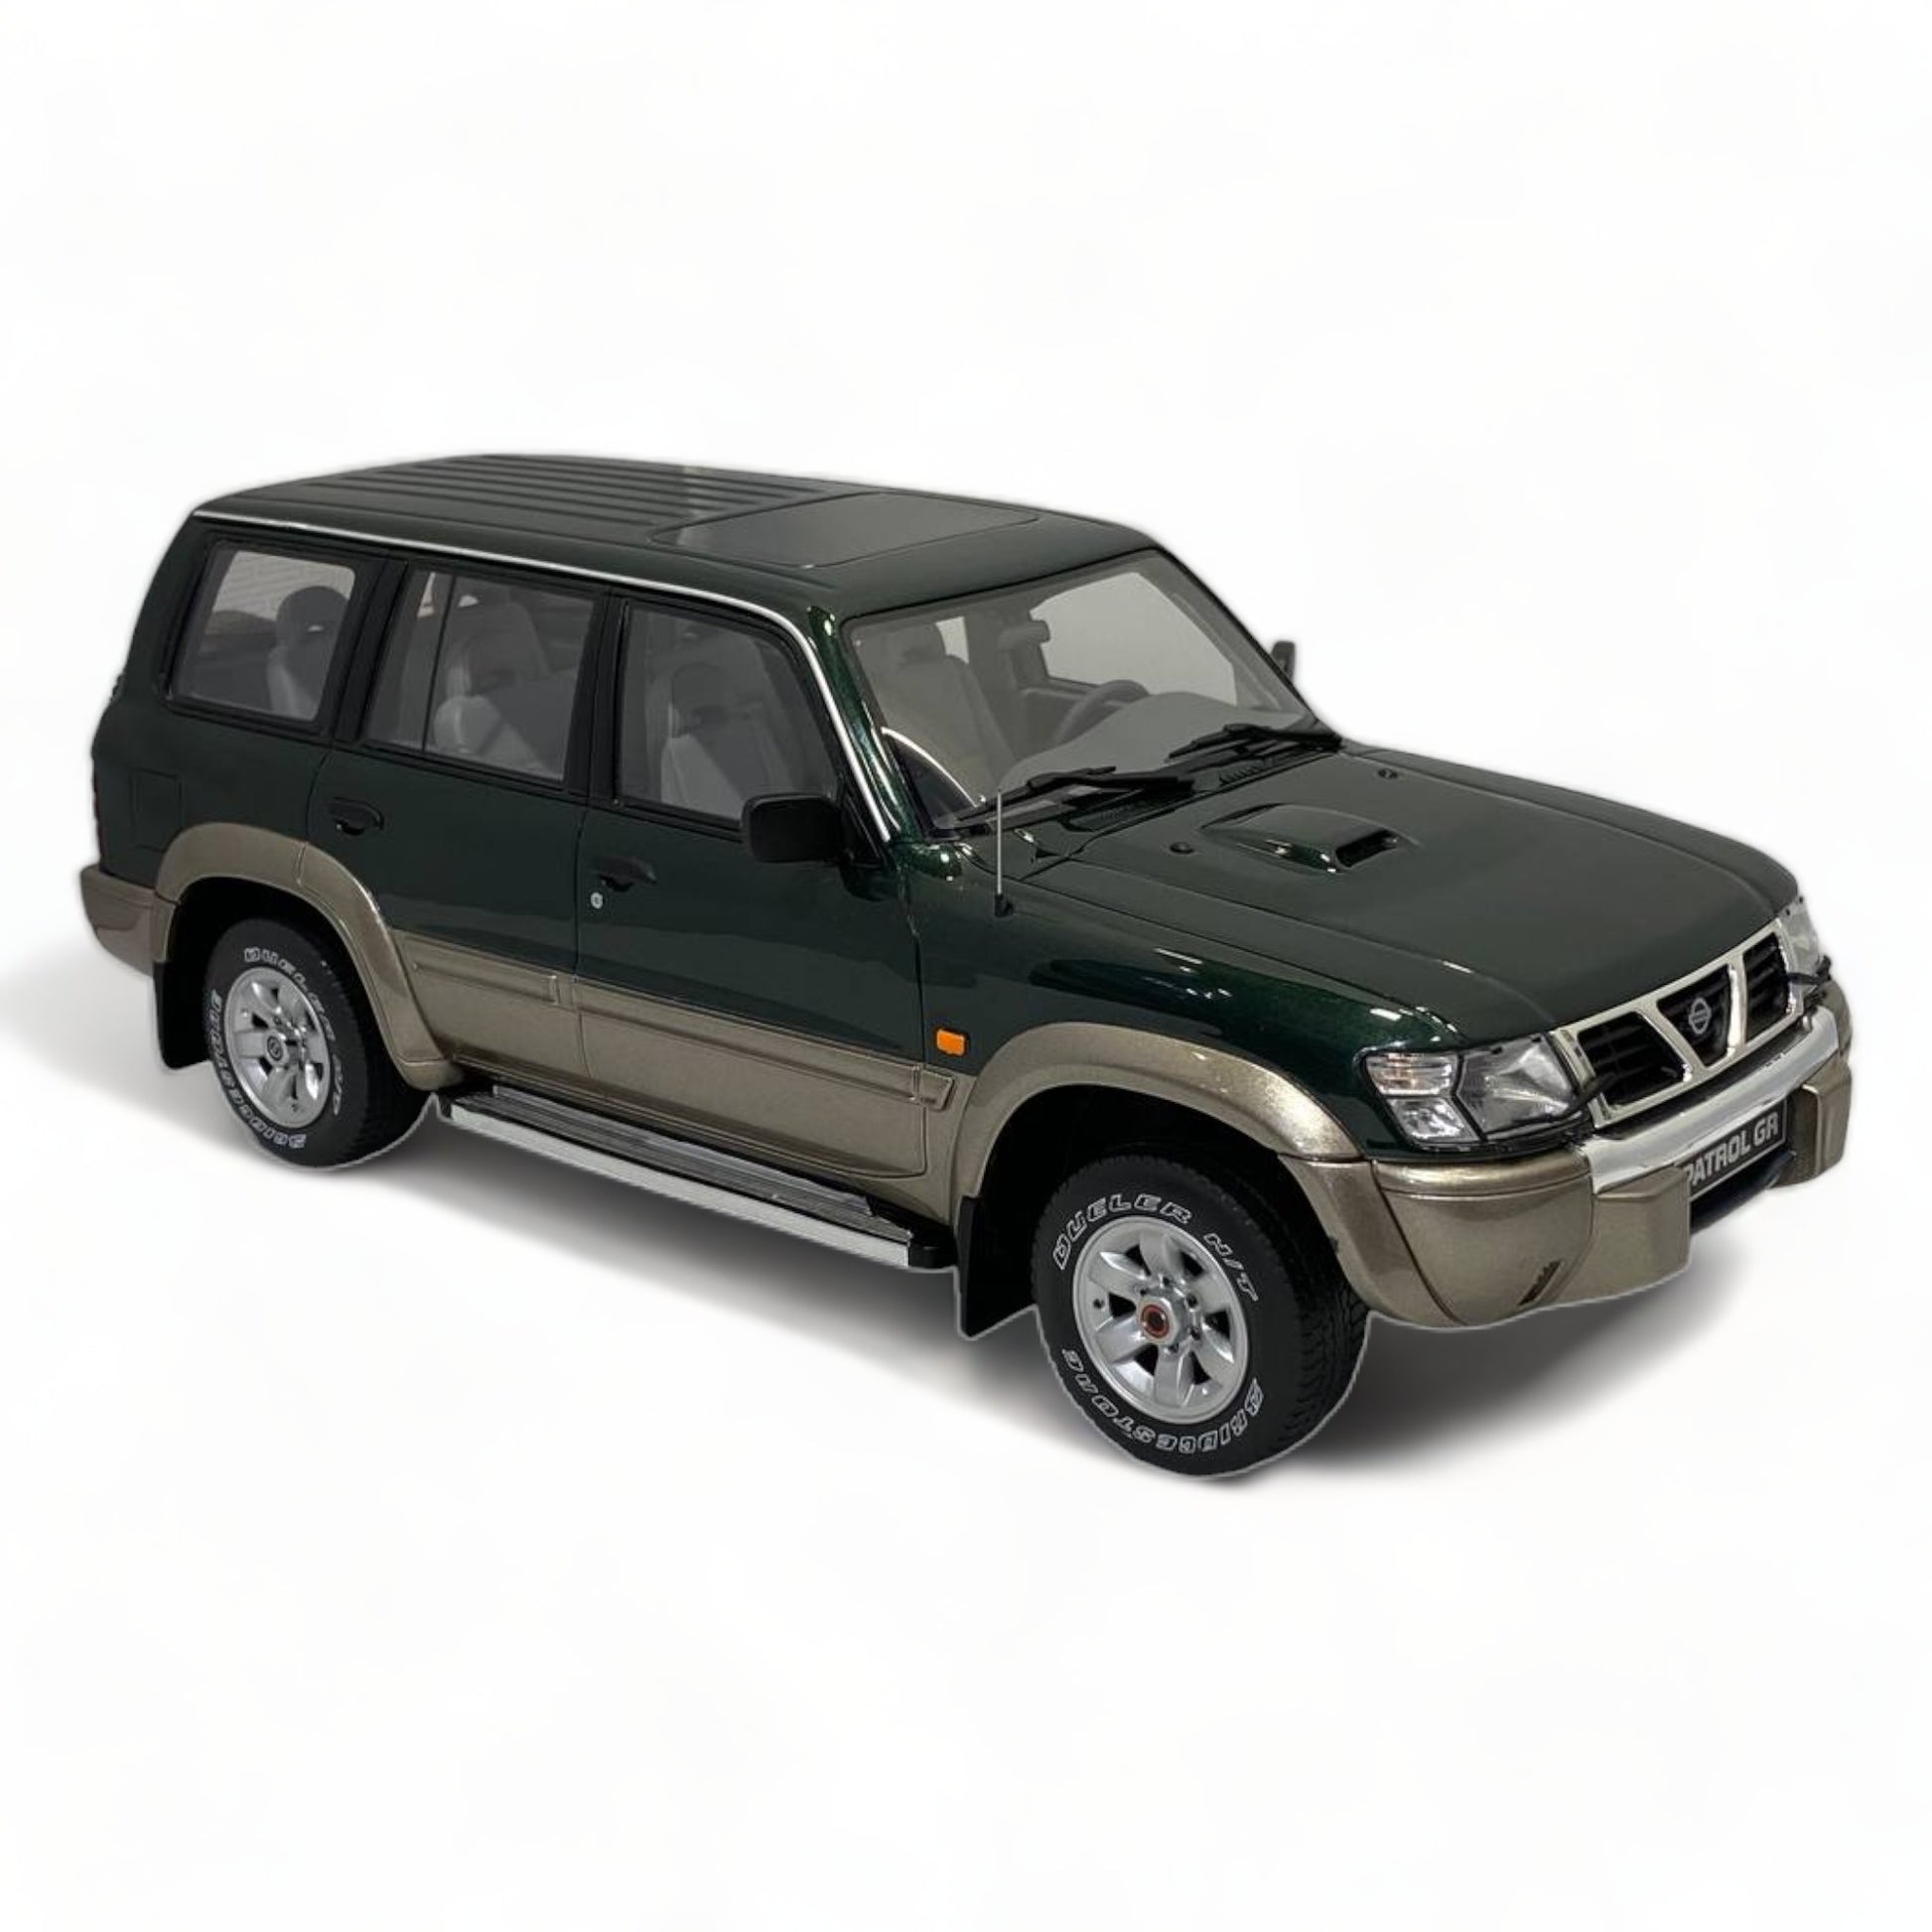 1/18 Resin Model: Nissan PATROL GR Y61 by Otto Mobile Scale Model Car|Sold in Dturman.com Dubai UAE.